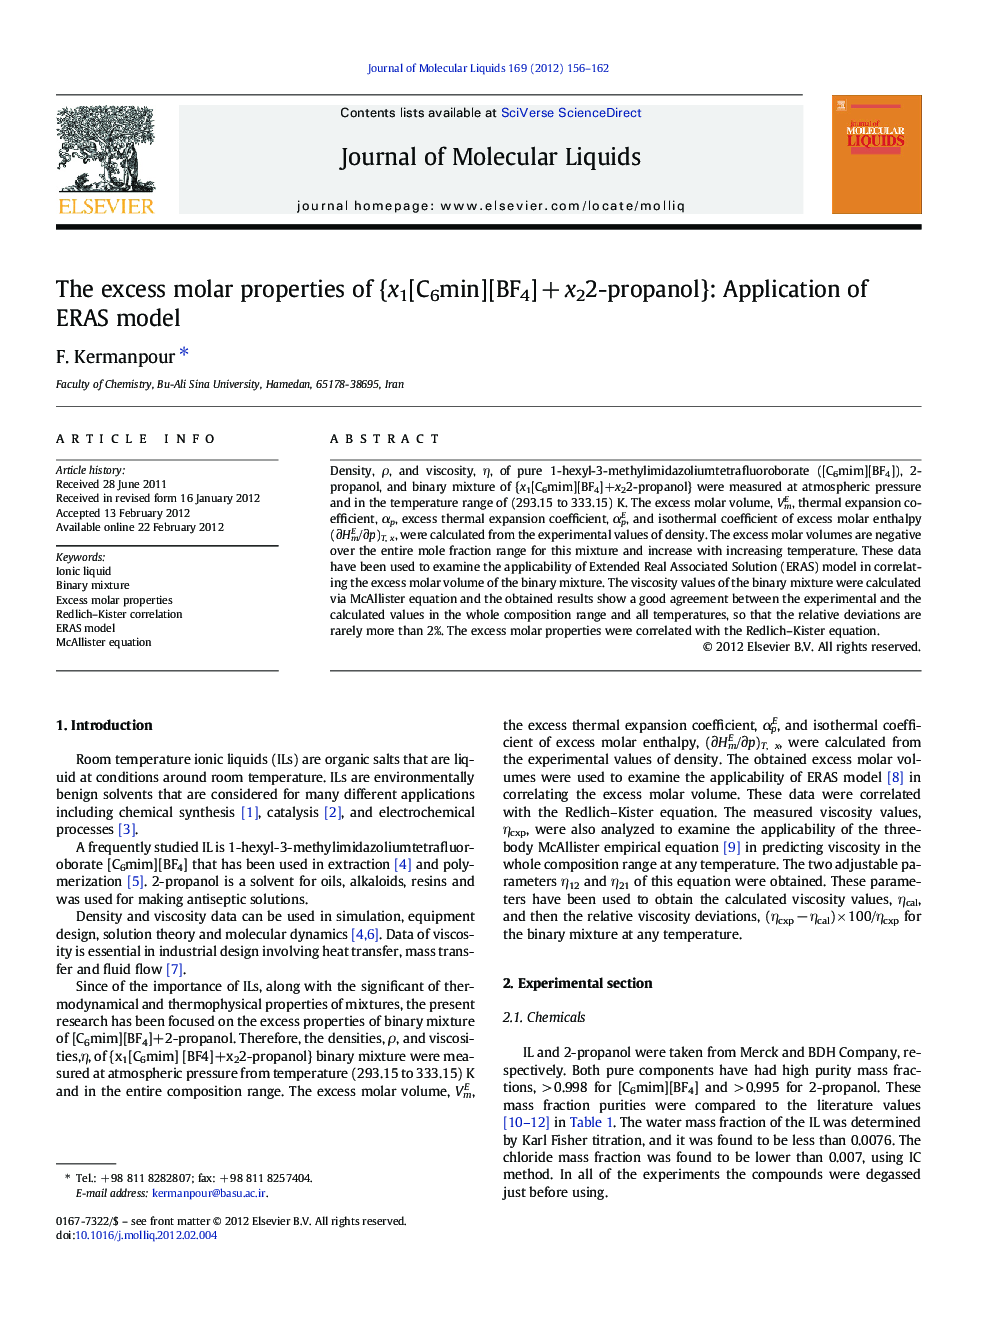 The excess molar properties of {x1[C6min][BF4]Â +Â x22-propanol}: Application of ERAS model